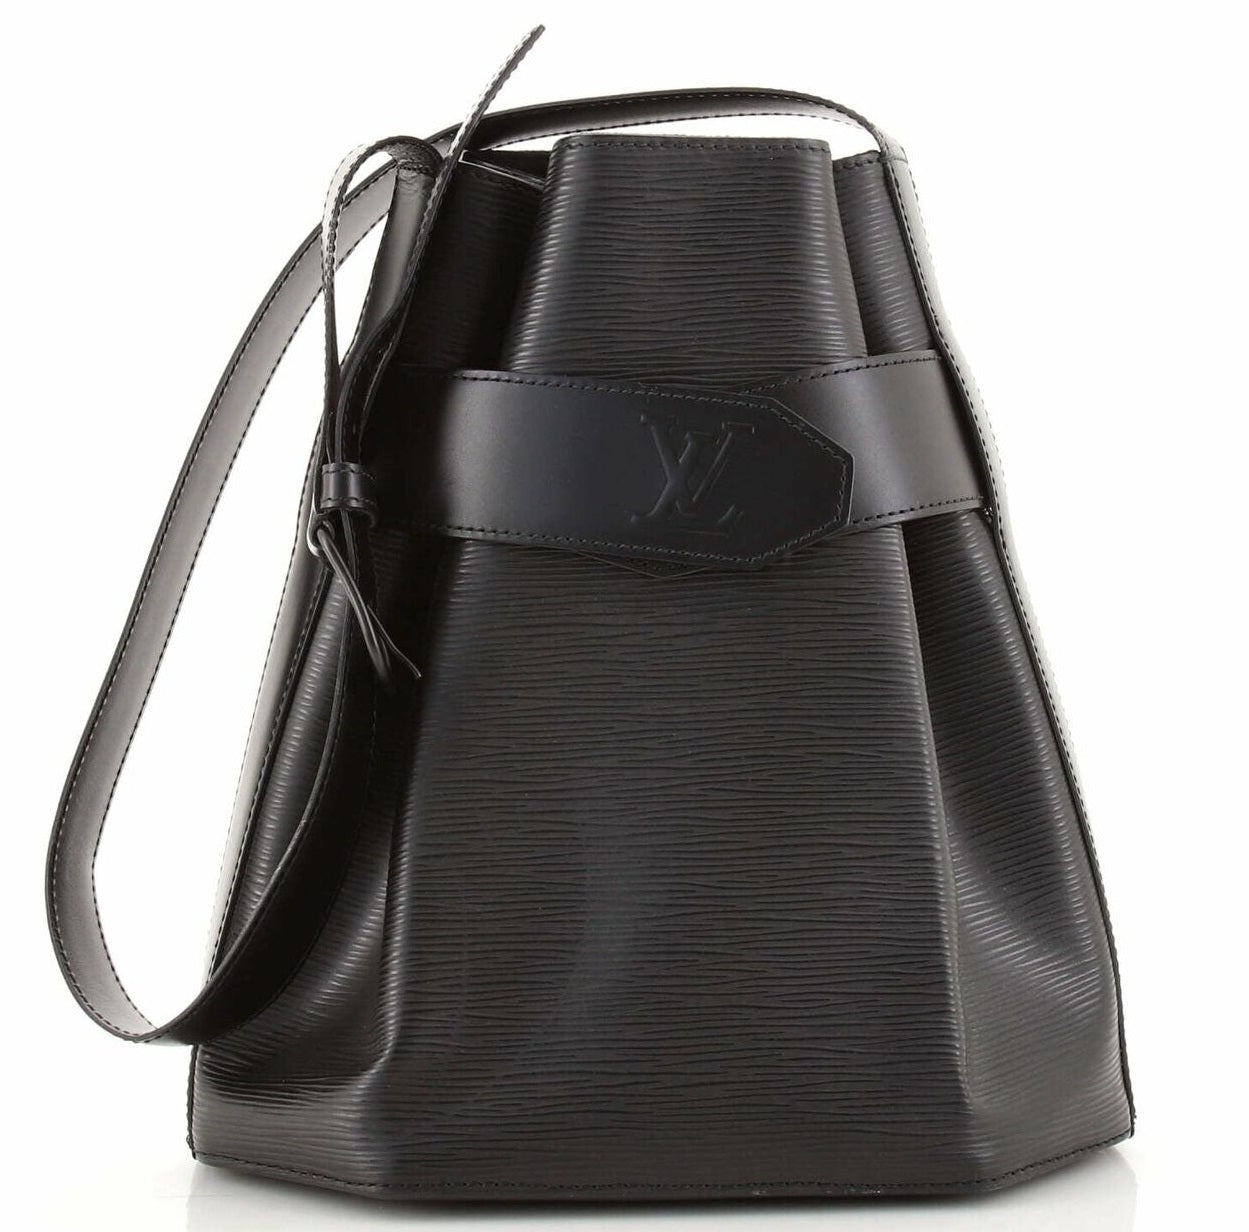 Vintage Louis Vuitton Bag - 242 For Sale on 1stDibs  vintage louis vuitton  bags value, how much is a vintage louis vuitton bag worth, louis vitton  vintage bag